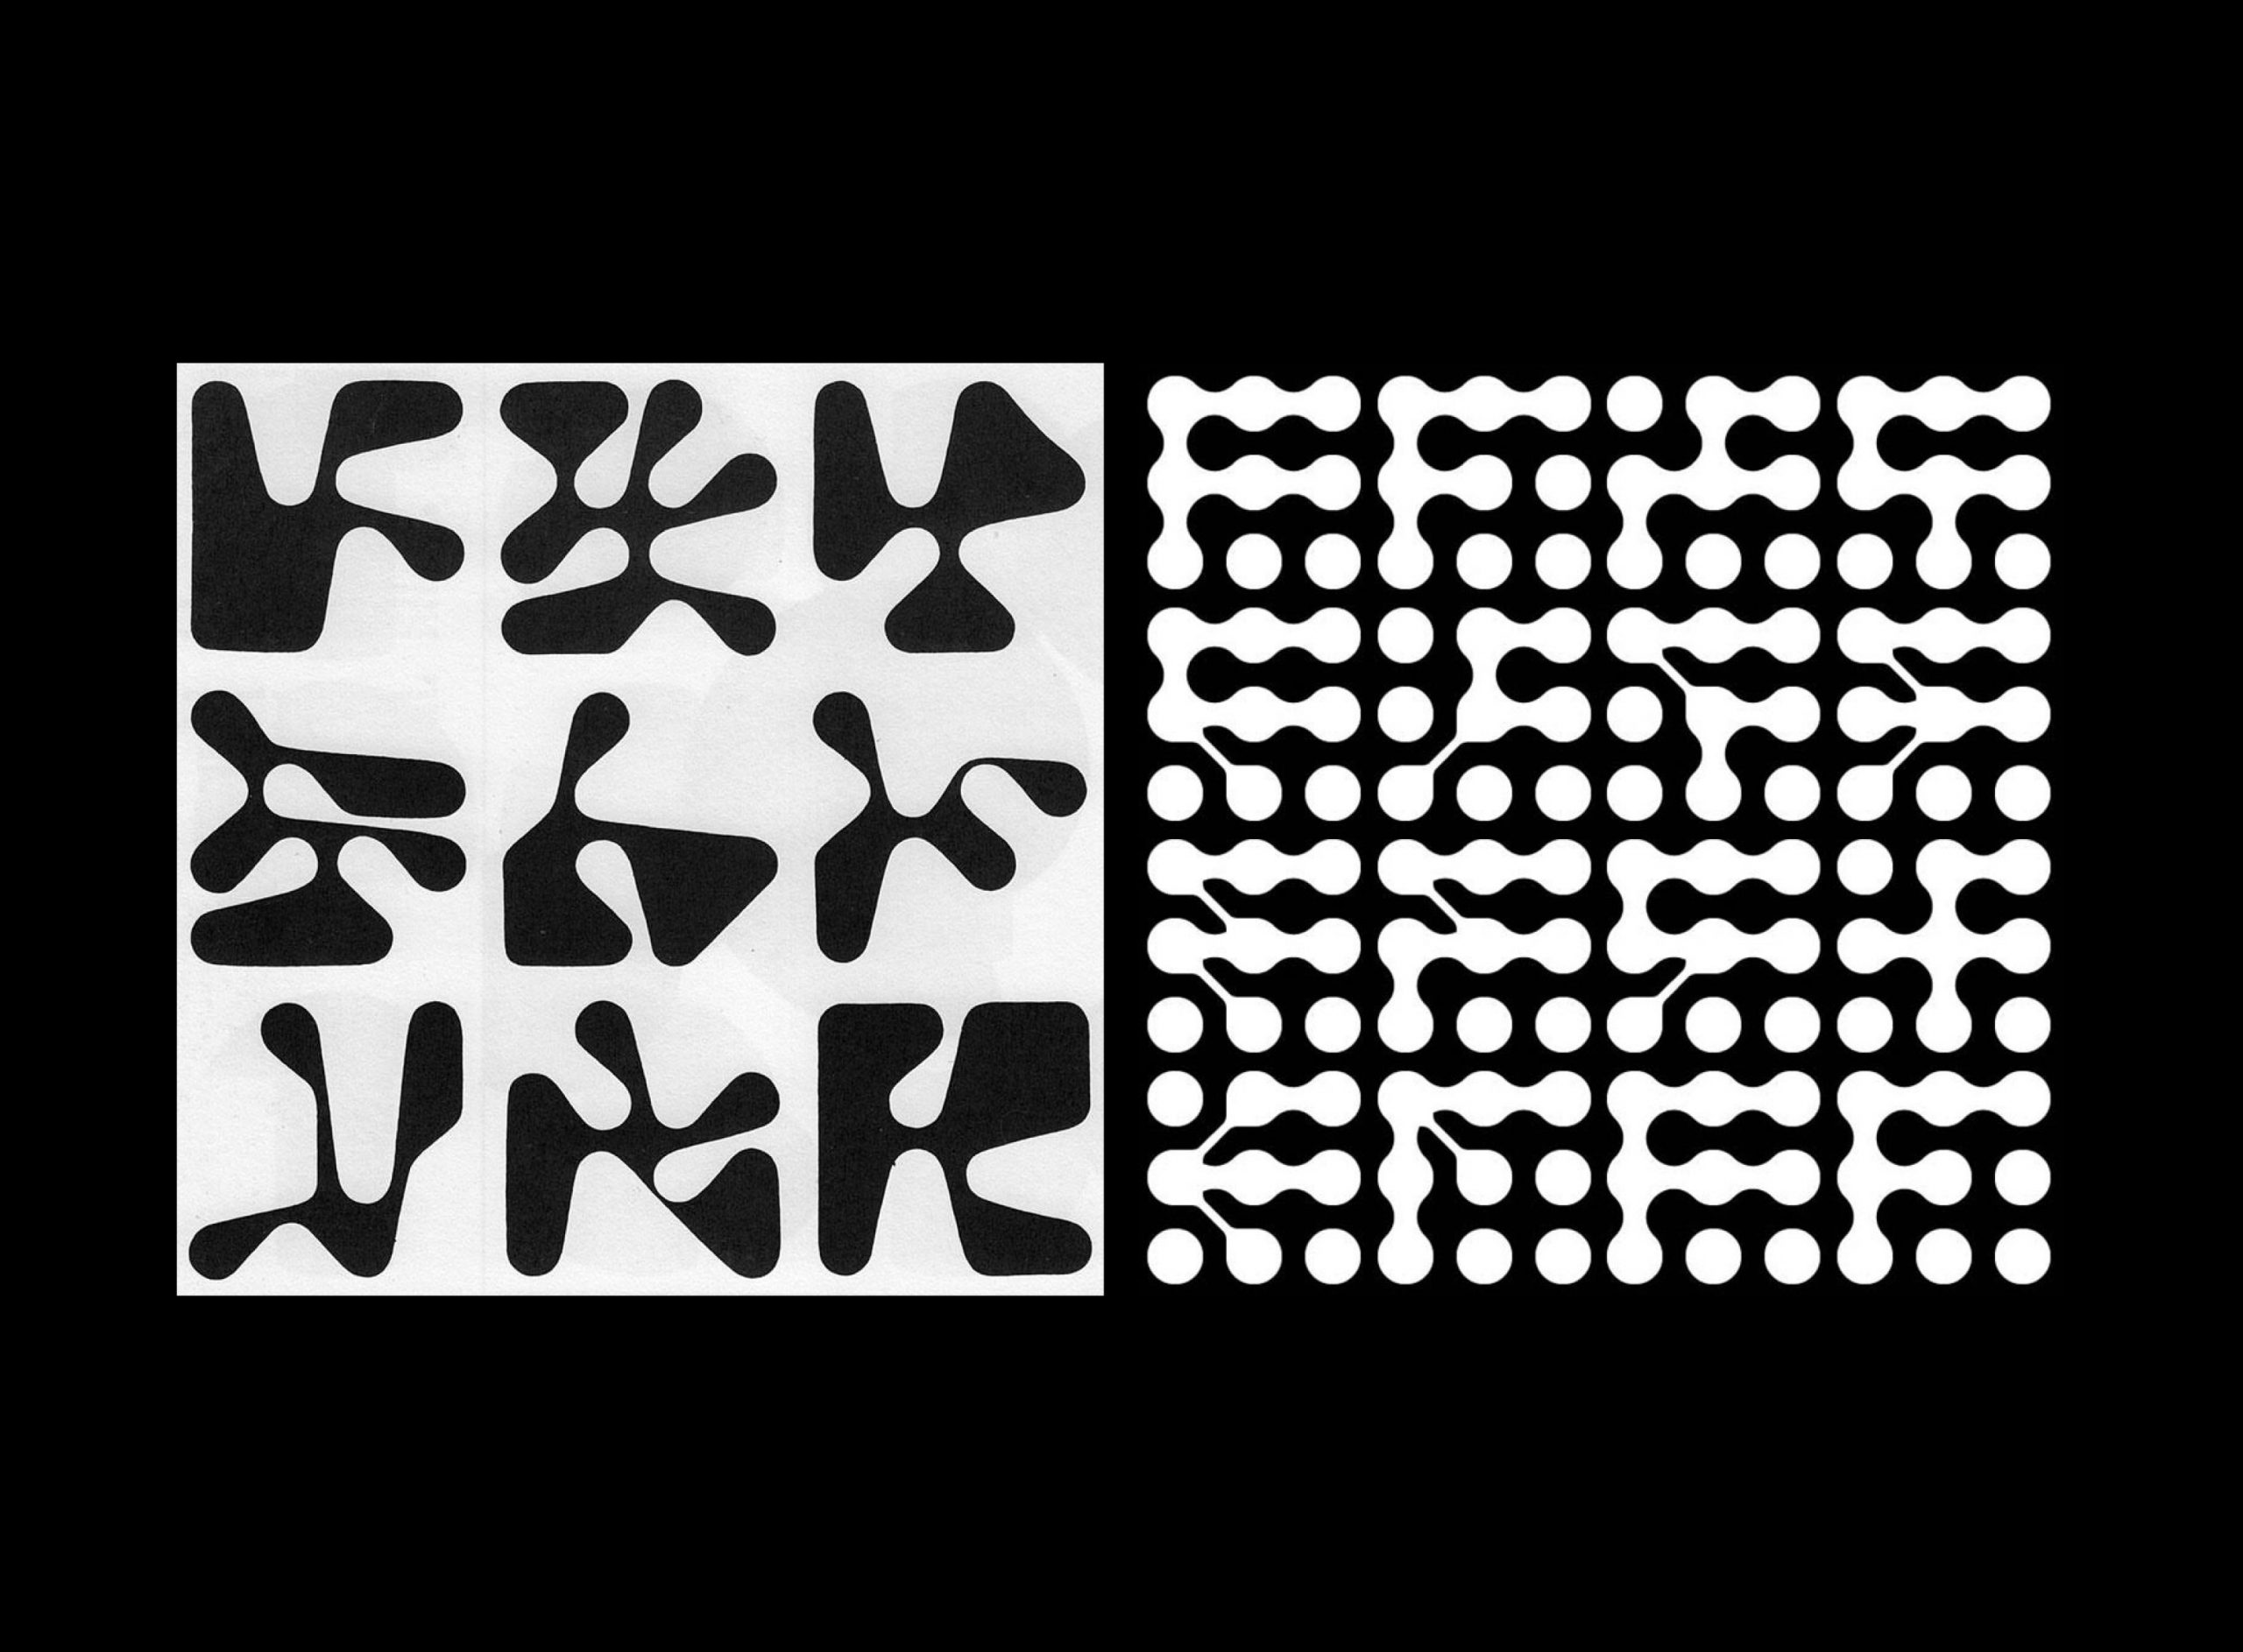 On the left: Armin Hofmann, “Ubber band” (shape generator), 1965. On the right: Nigel Cottier, Letterform Variations, 2021.